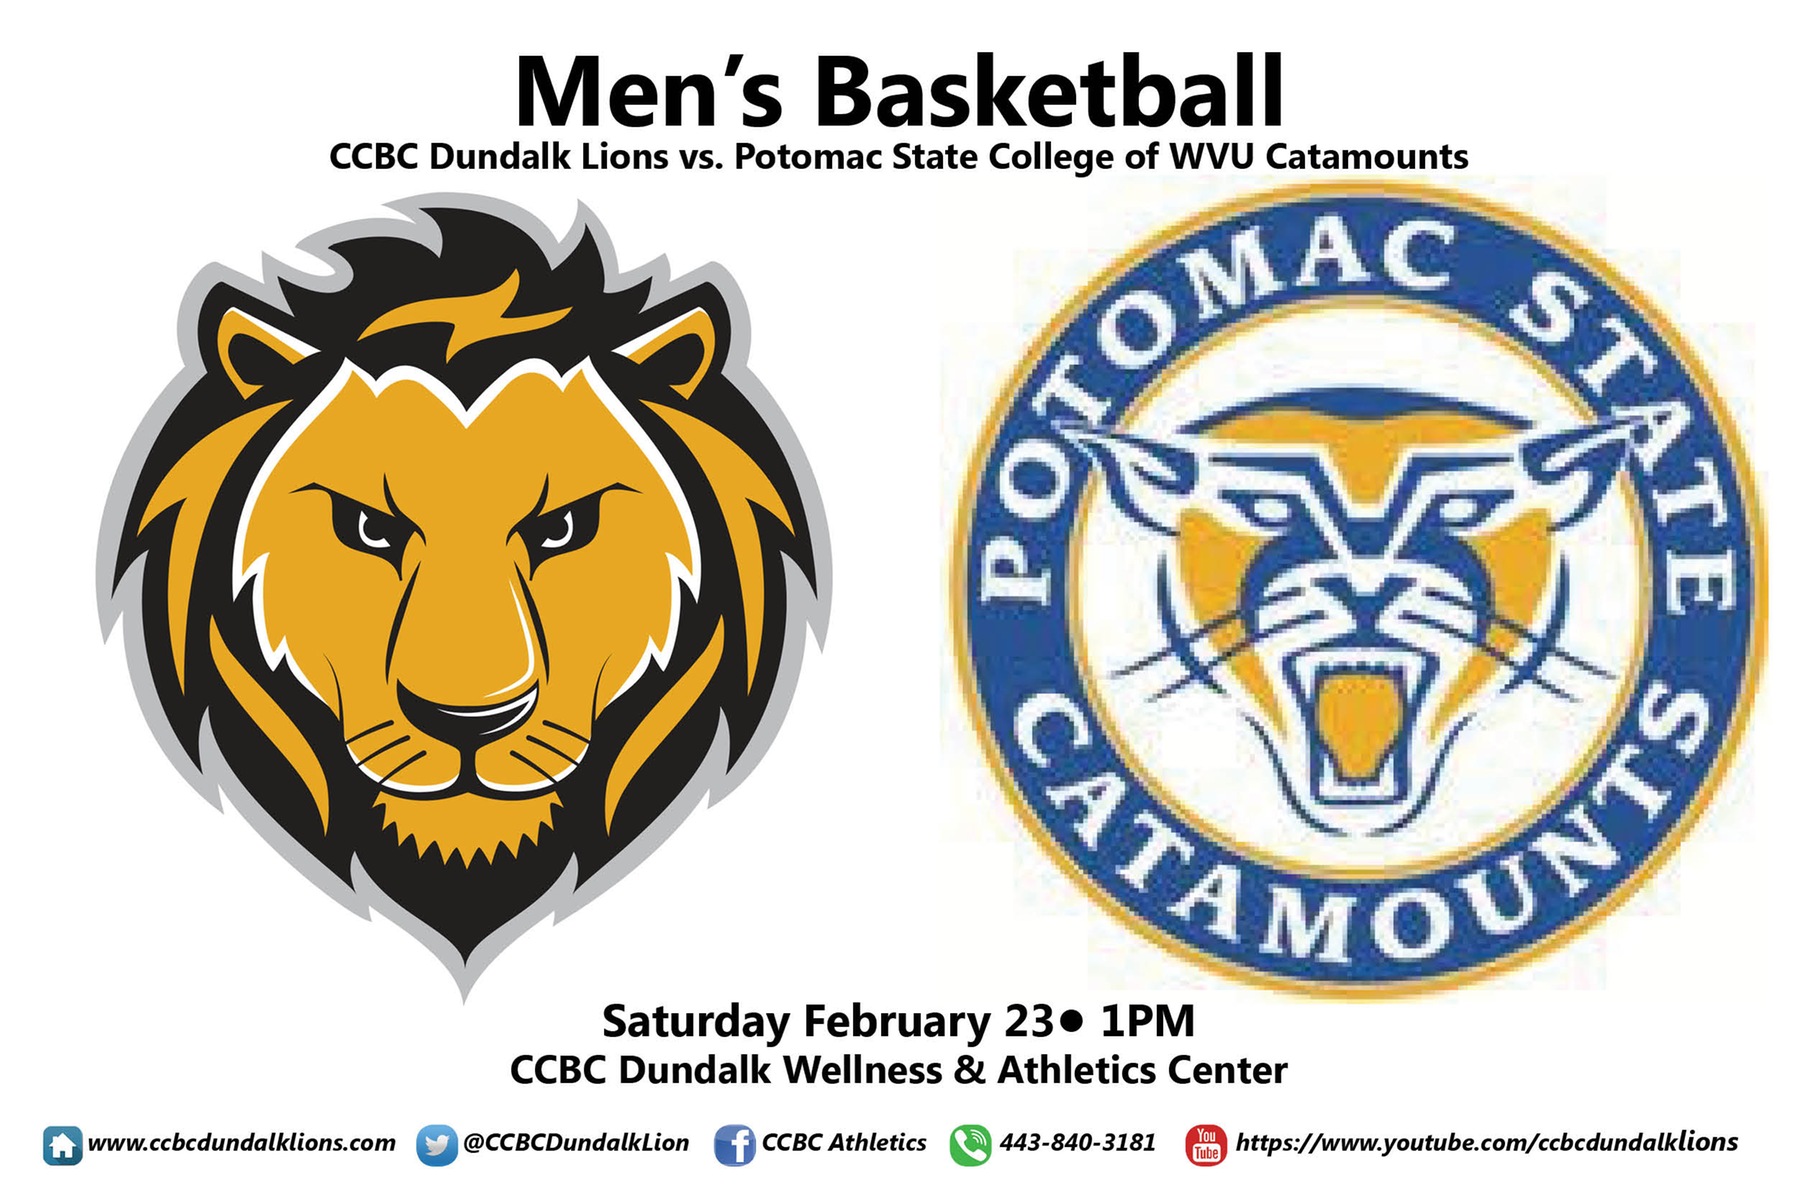 Lions host Catamounts, Saturday February 23 | 1 PM